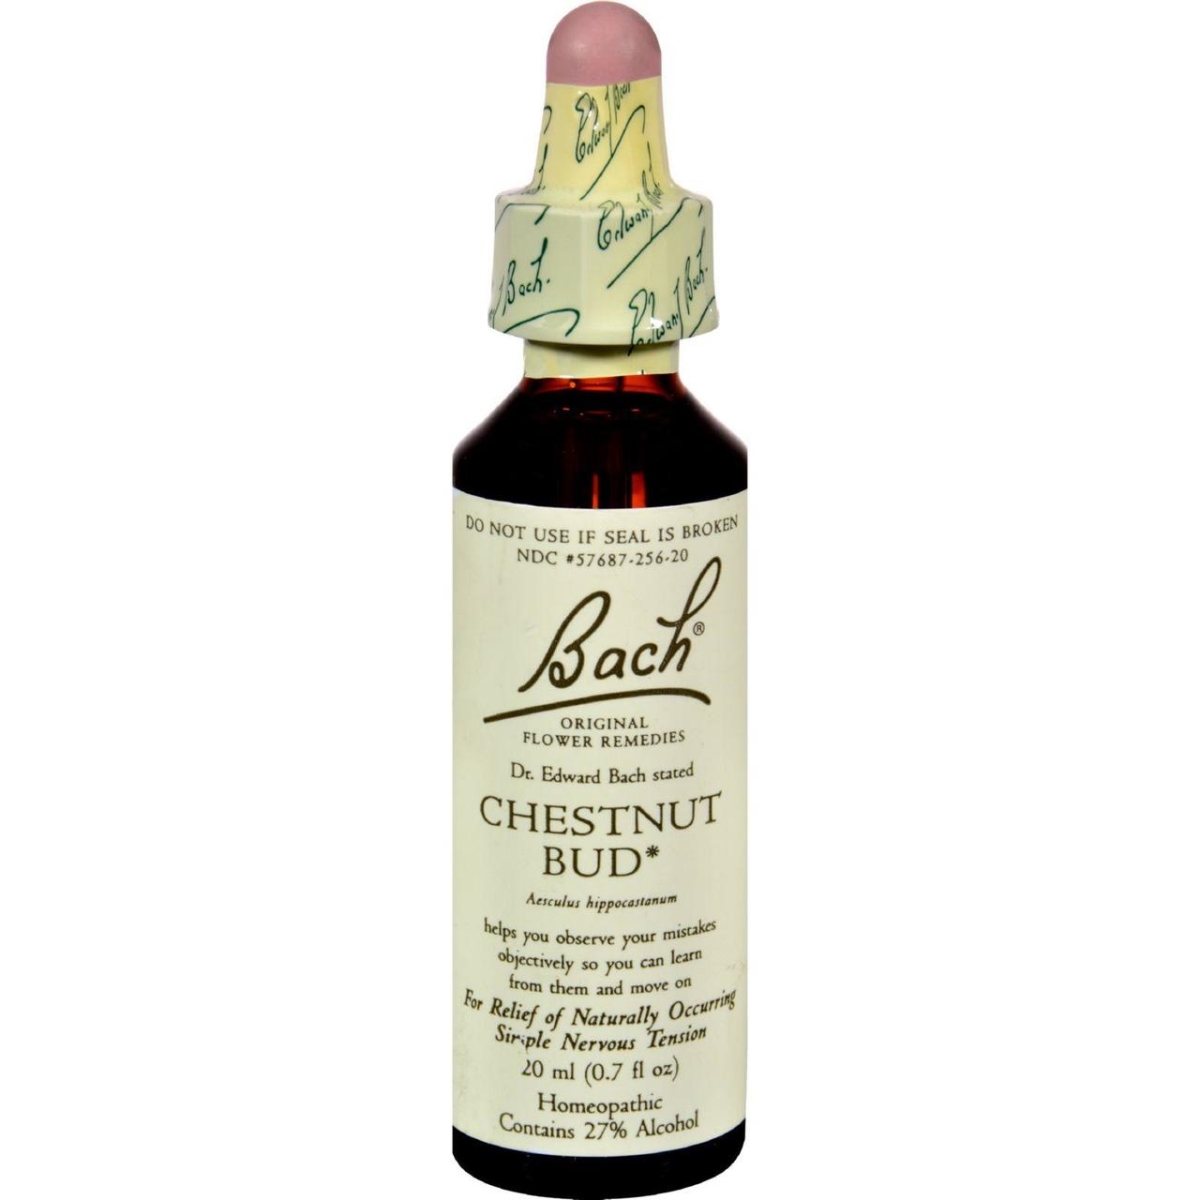 Hg0233510 0.7 Fl Oz Flower Remedies Essence, Chestnut Bud